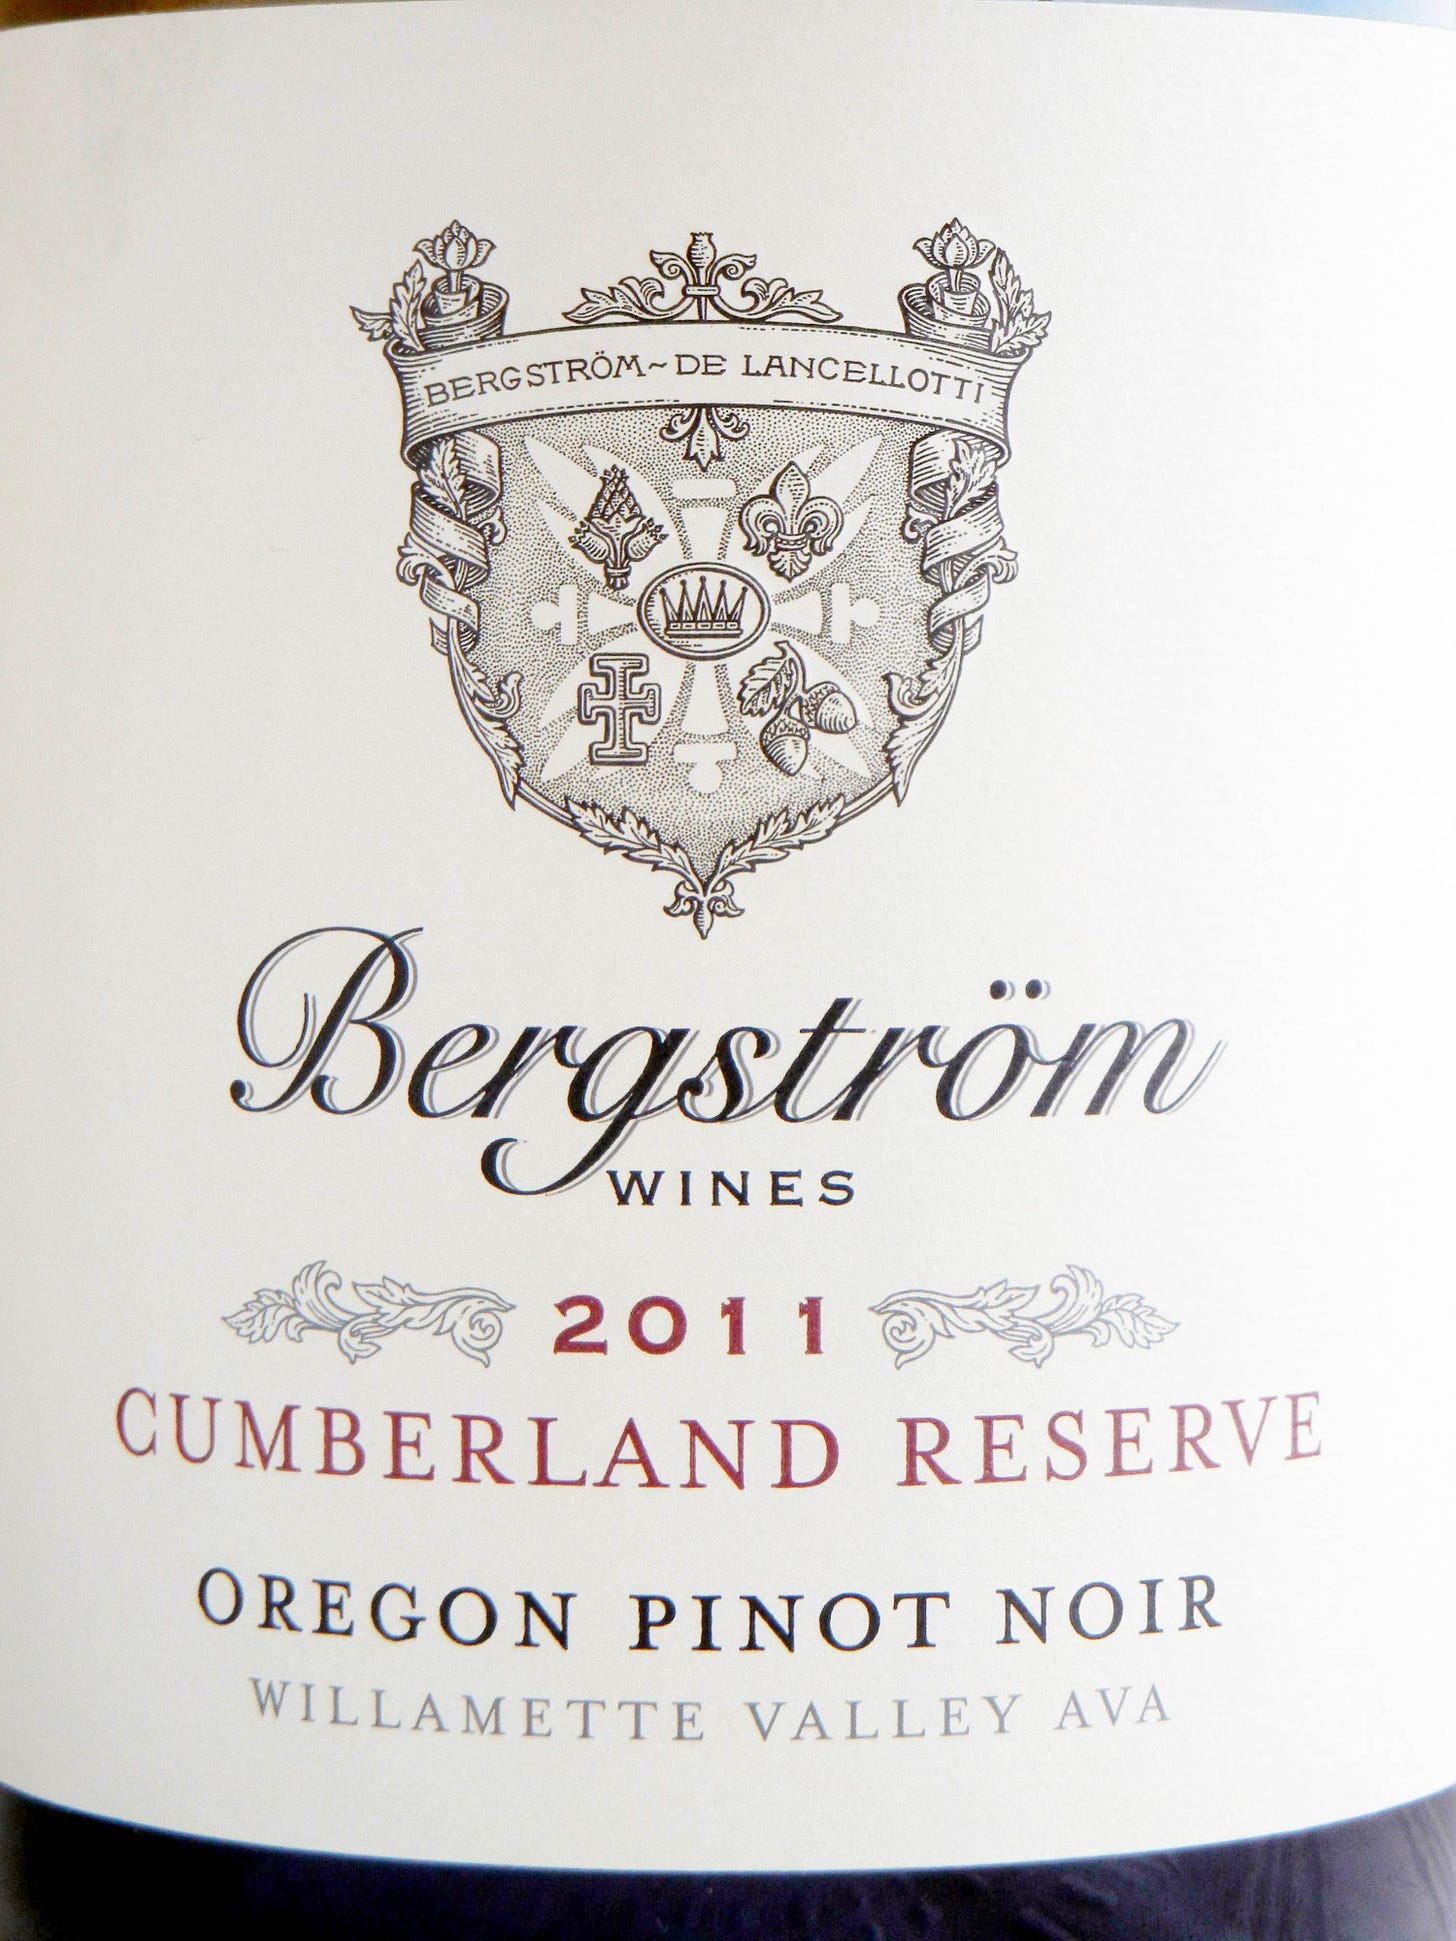 Bergstrom Cumberland Reserve Pinot Noir 2011 Label - BC Pinot Noir Tasting Review 11